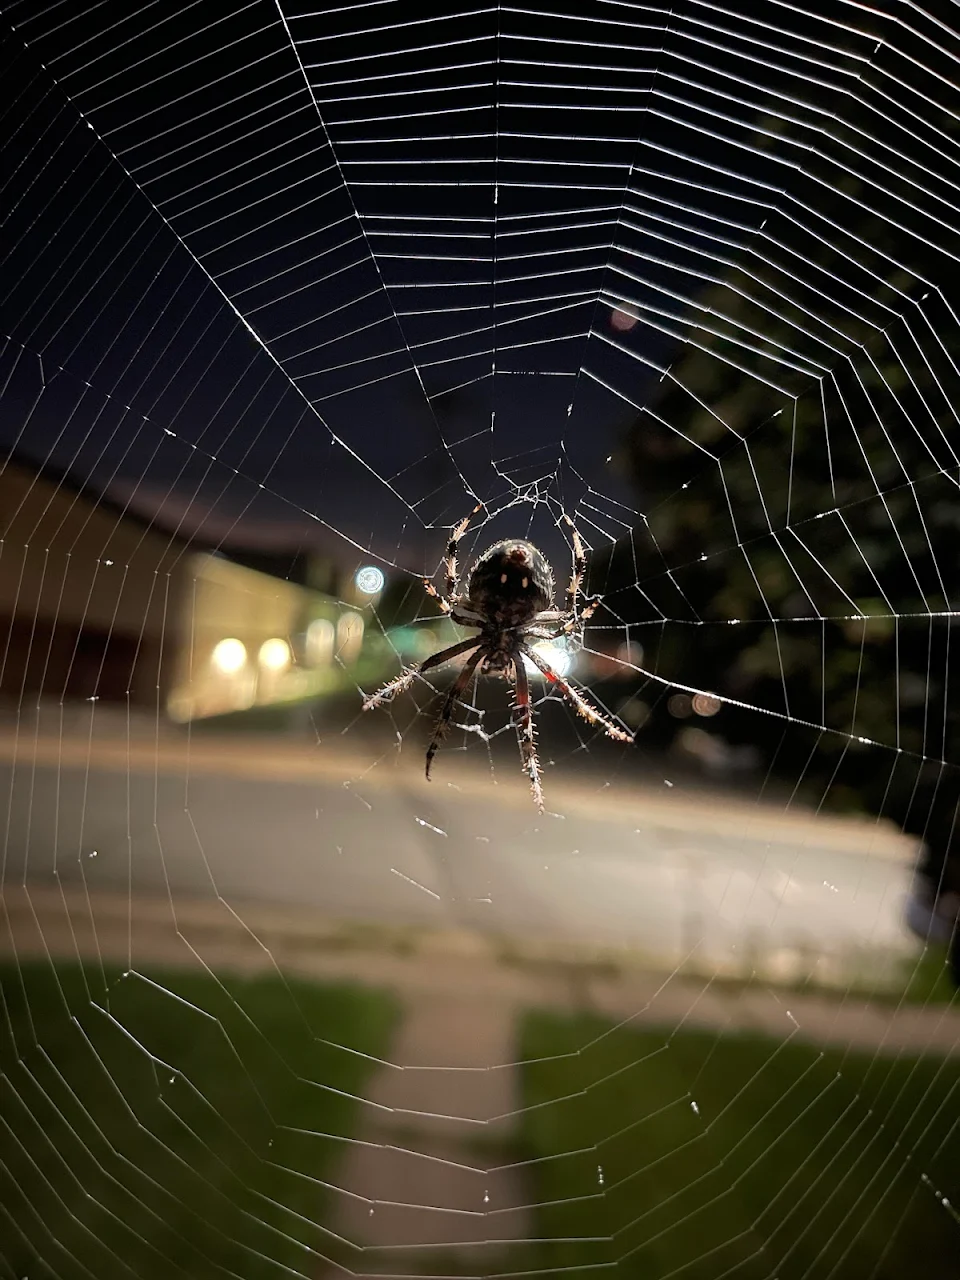 A very photogenic spider on my doorframe